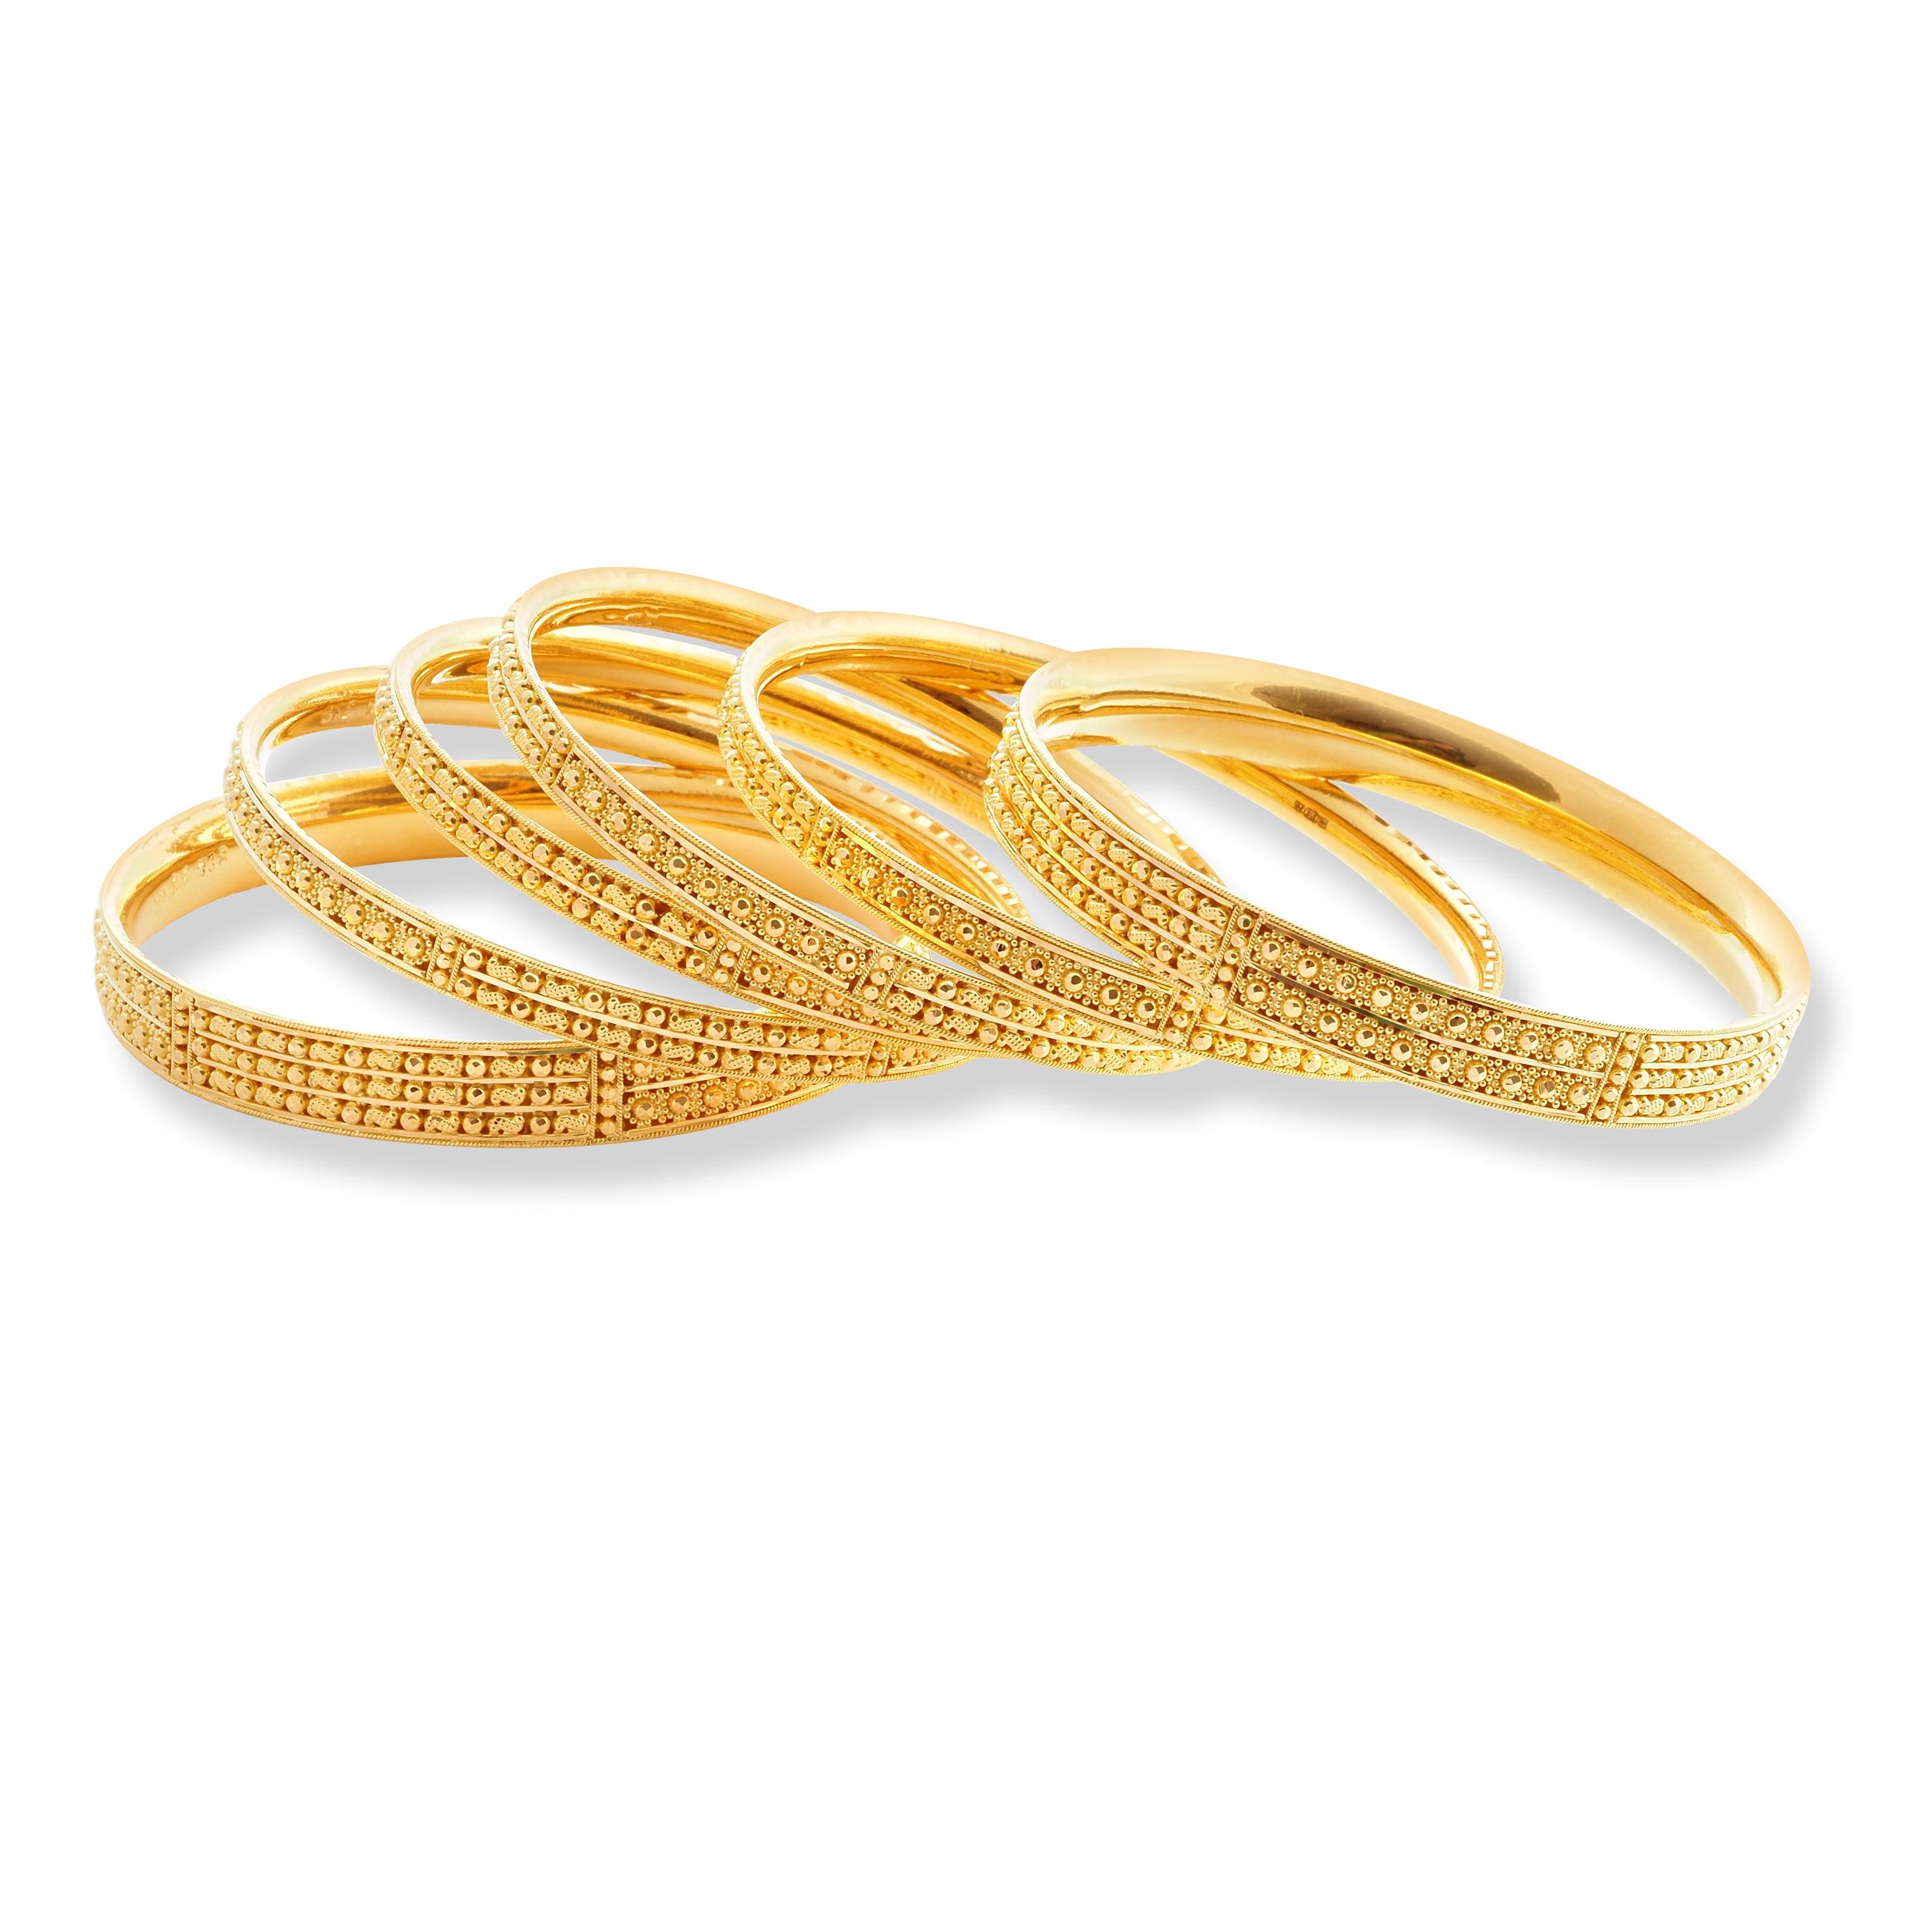 Set of Six 22ct Gold Bangles with Diamond Cut Design and Filigree Work B-8575 - Minar Jewellers